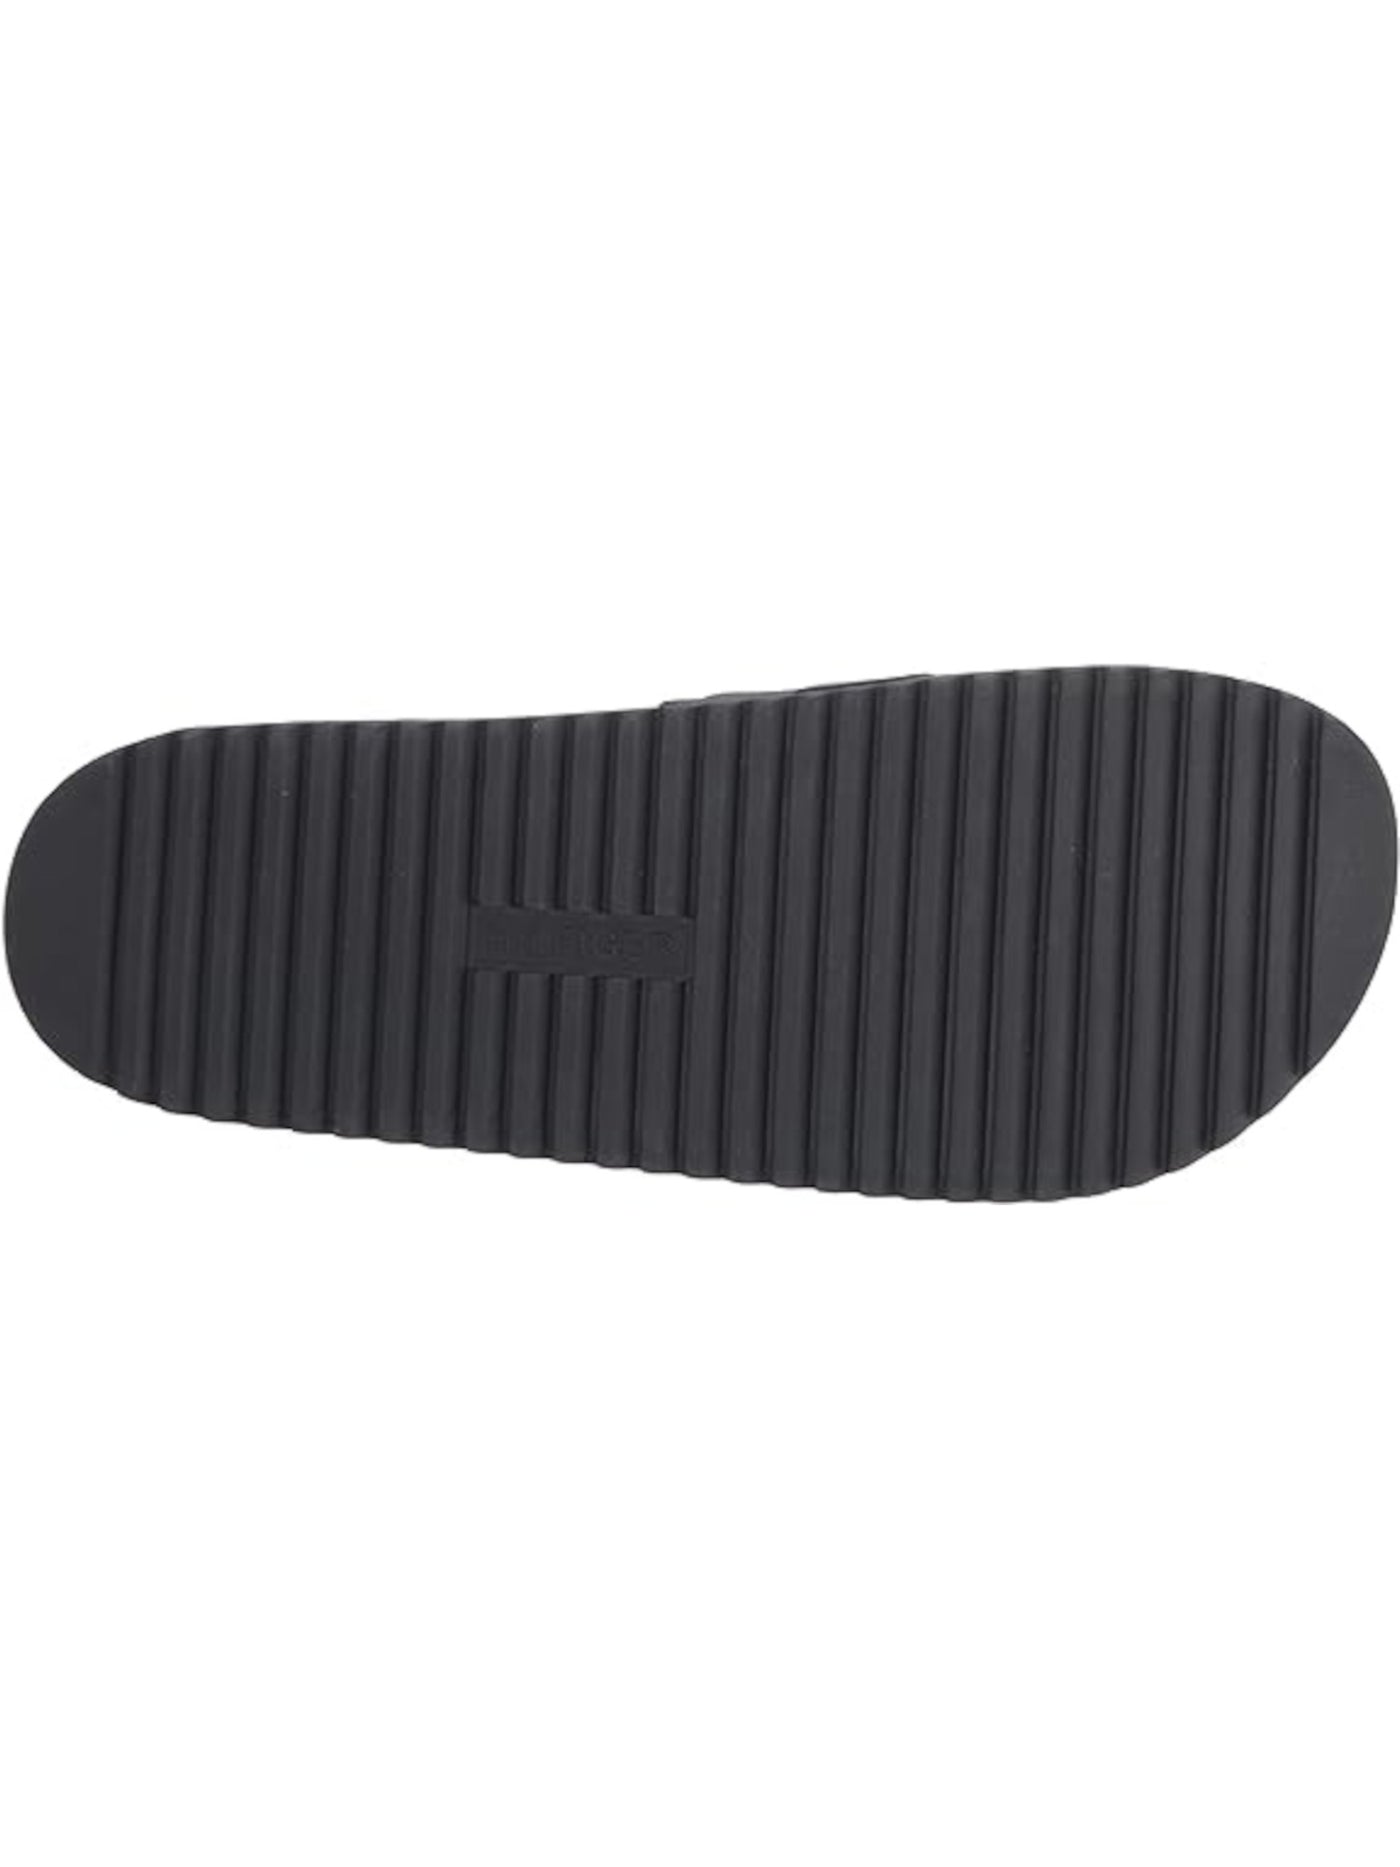 TOMMY HILFIGER Mens Navy Colorblocked Stripe Padded Ronks Open Toe Slip On Slide Sandals Shoes M